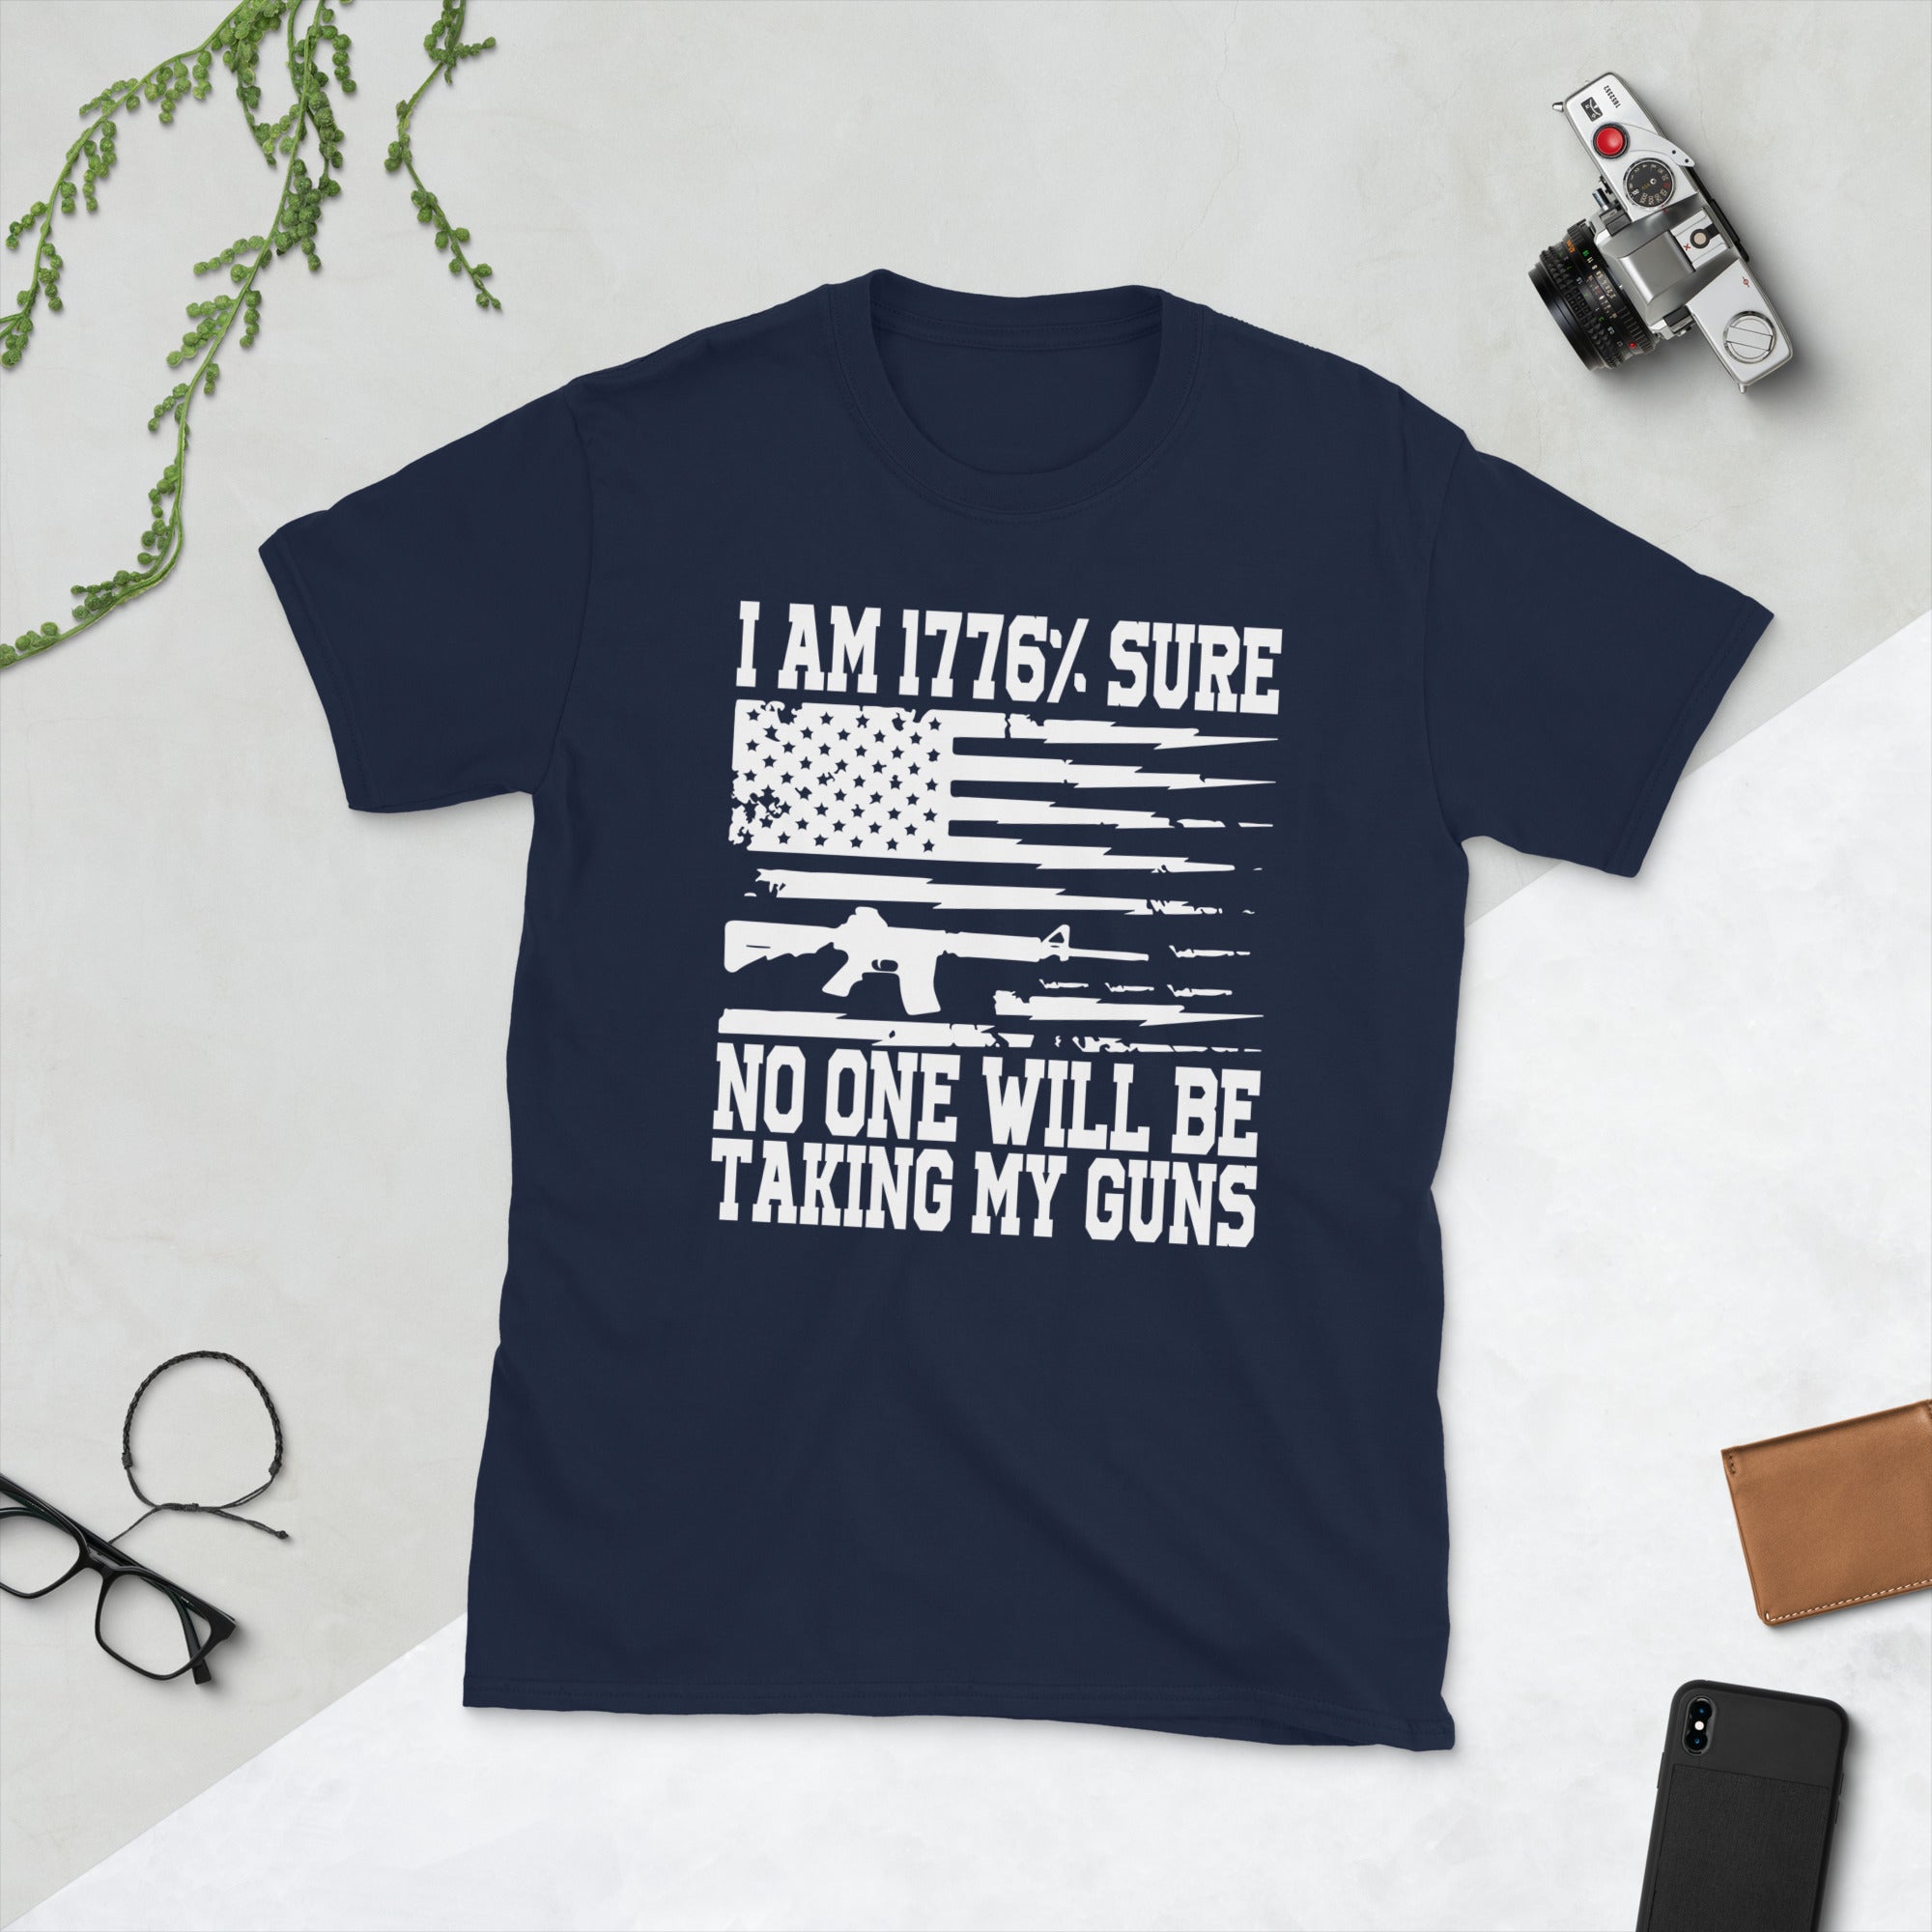 I am 1776% sure no one will be taking my guns, 1776 Tshirt, USA Flag Gun Shirt, 2nd Amendment Shirt, Patriotic USA Gun Rights, Pro Gun Shirt